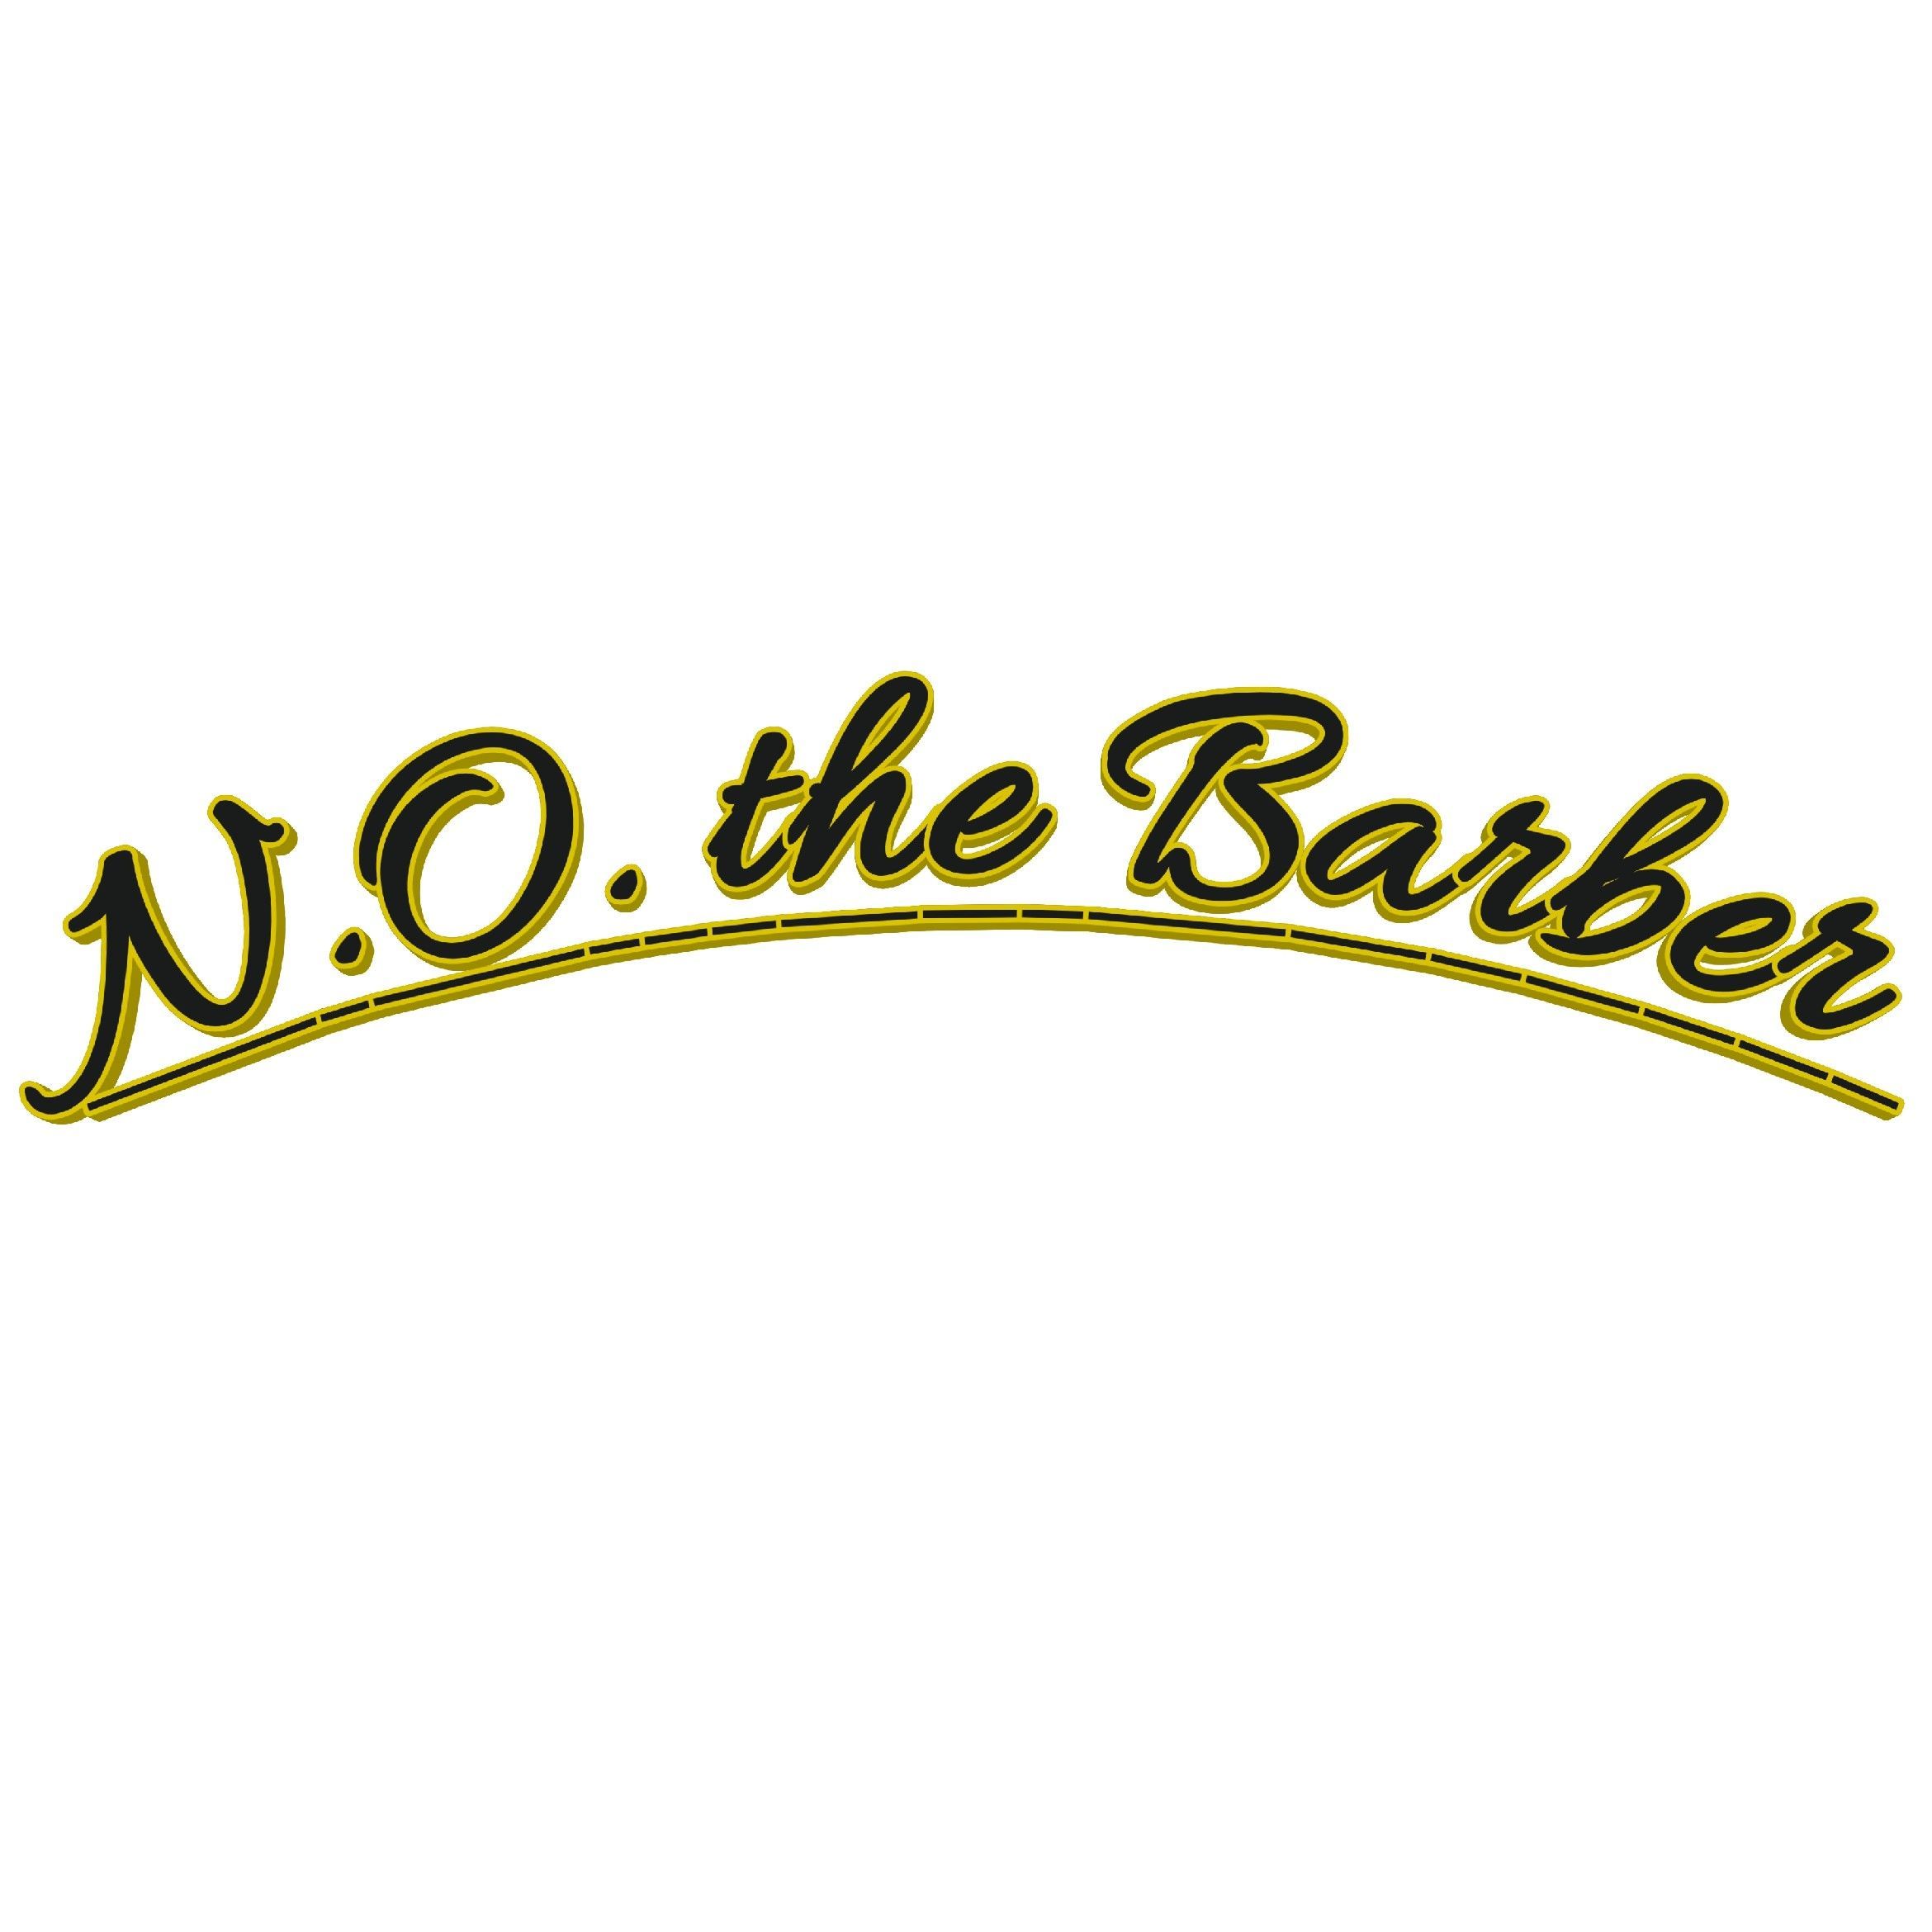 N.O. The Barber, 943 W Pioneer Pkwy, #935, Arlington, 76013